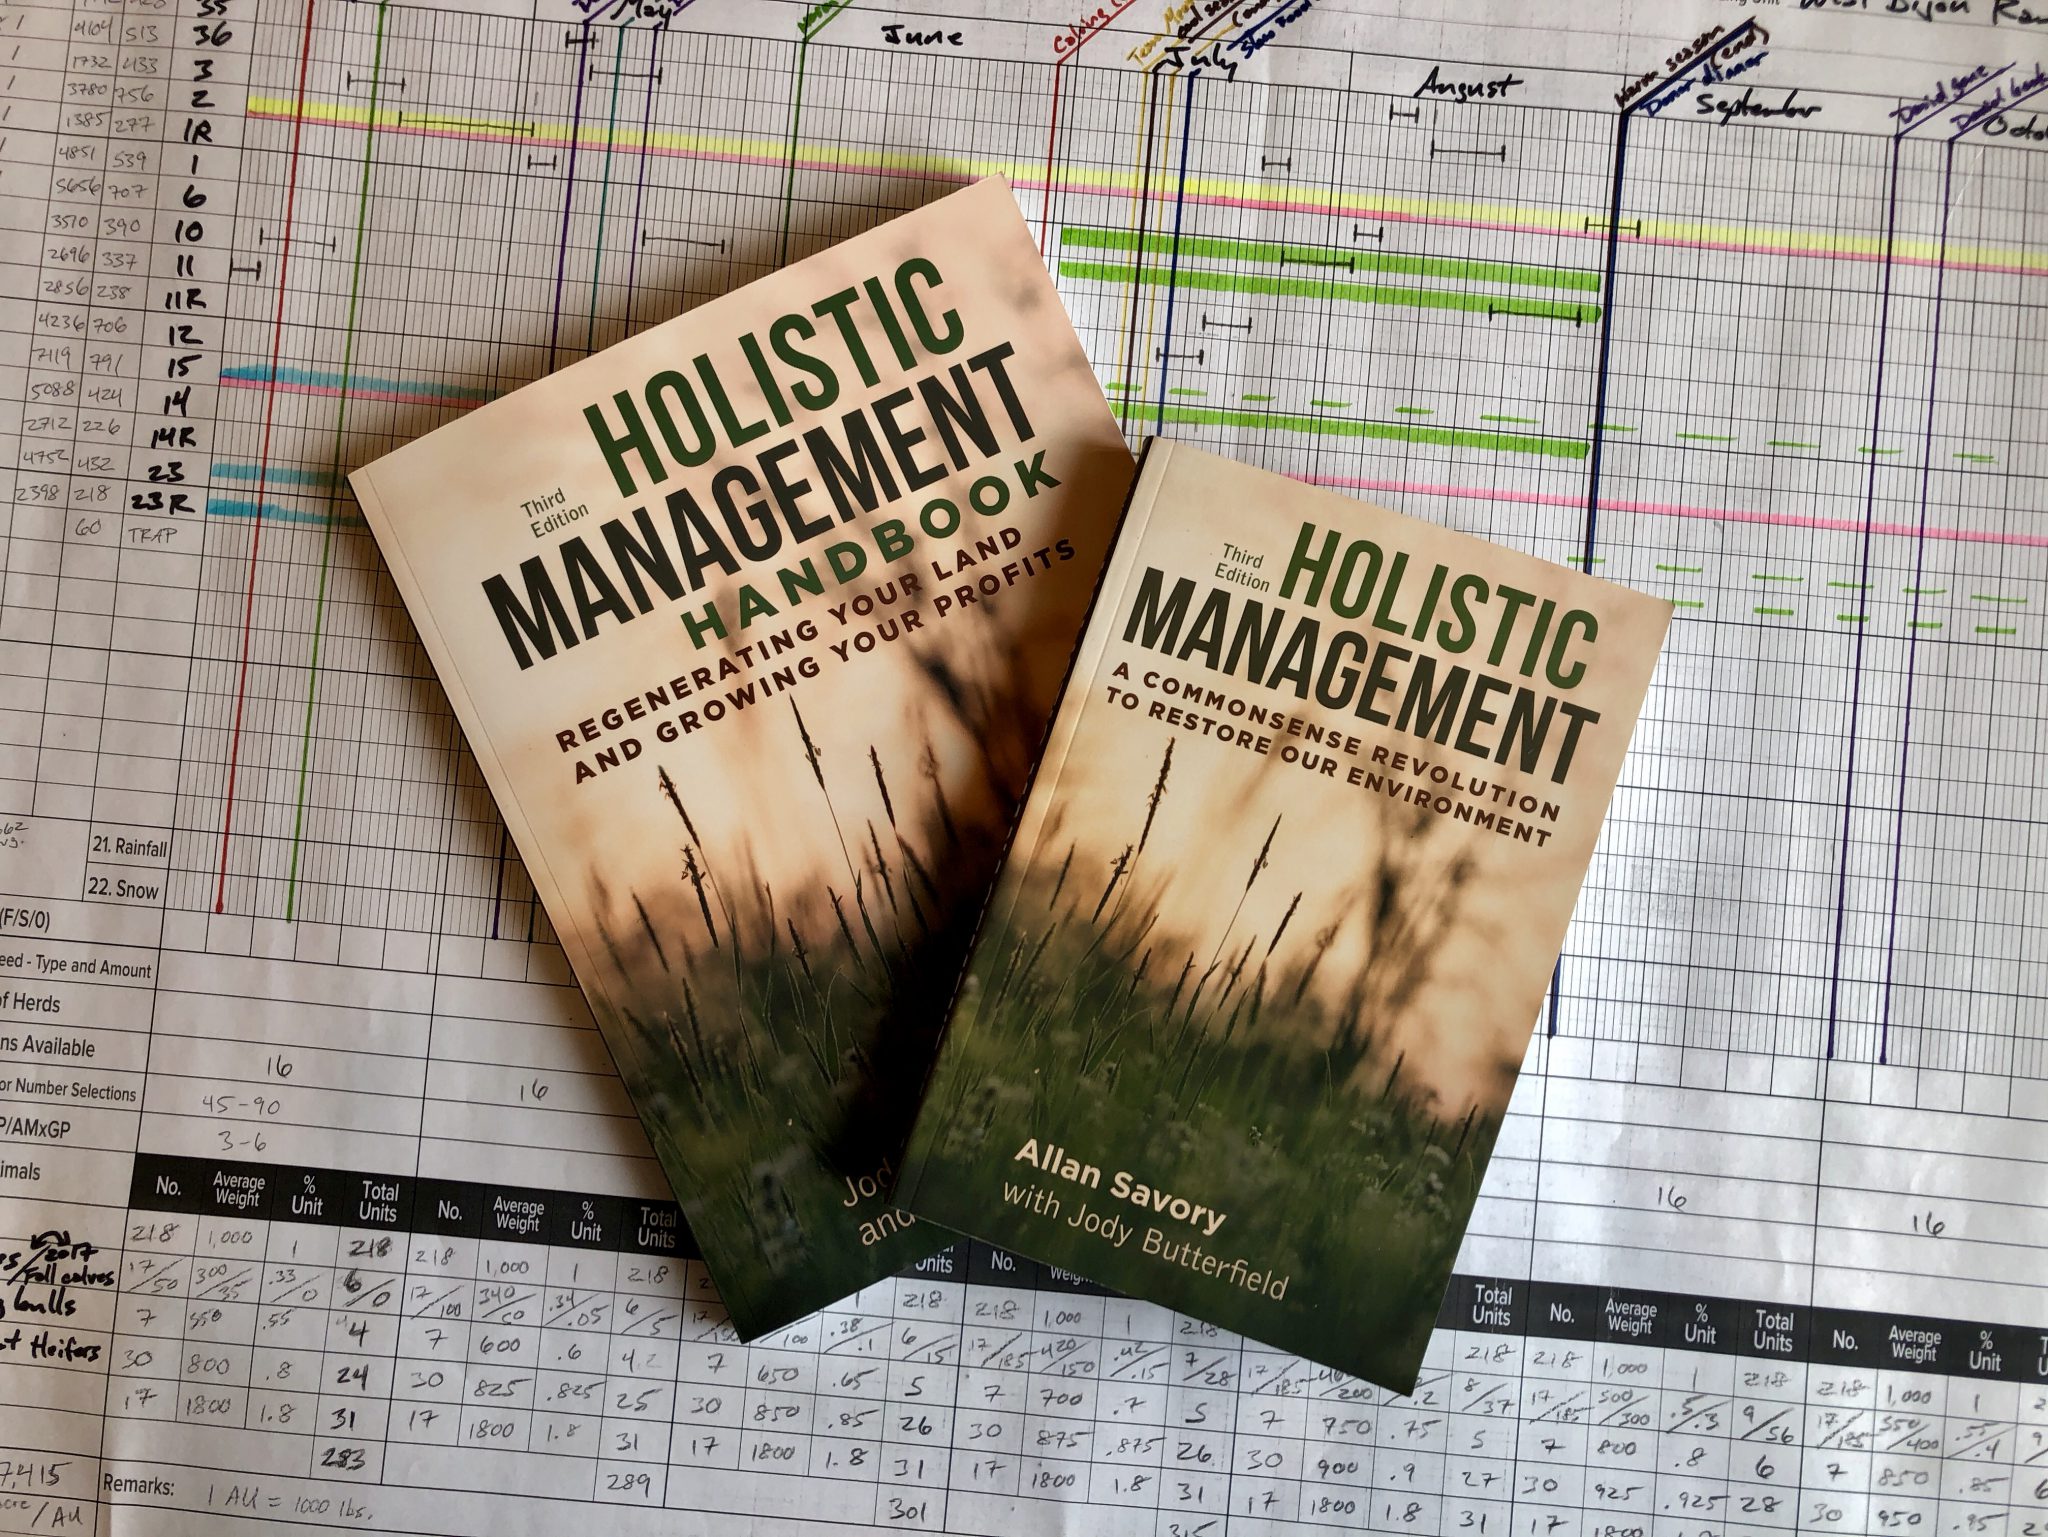 Holistic Management textbook and handbook